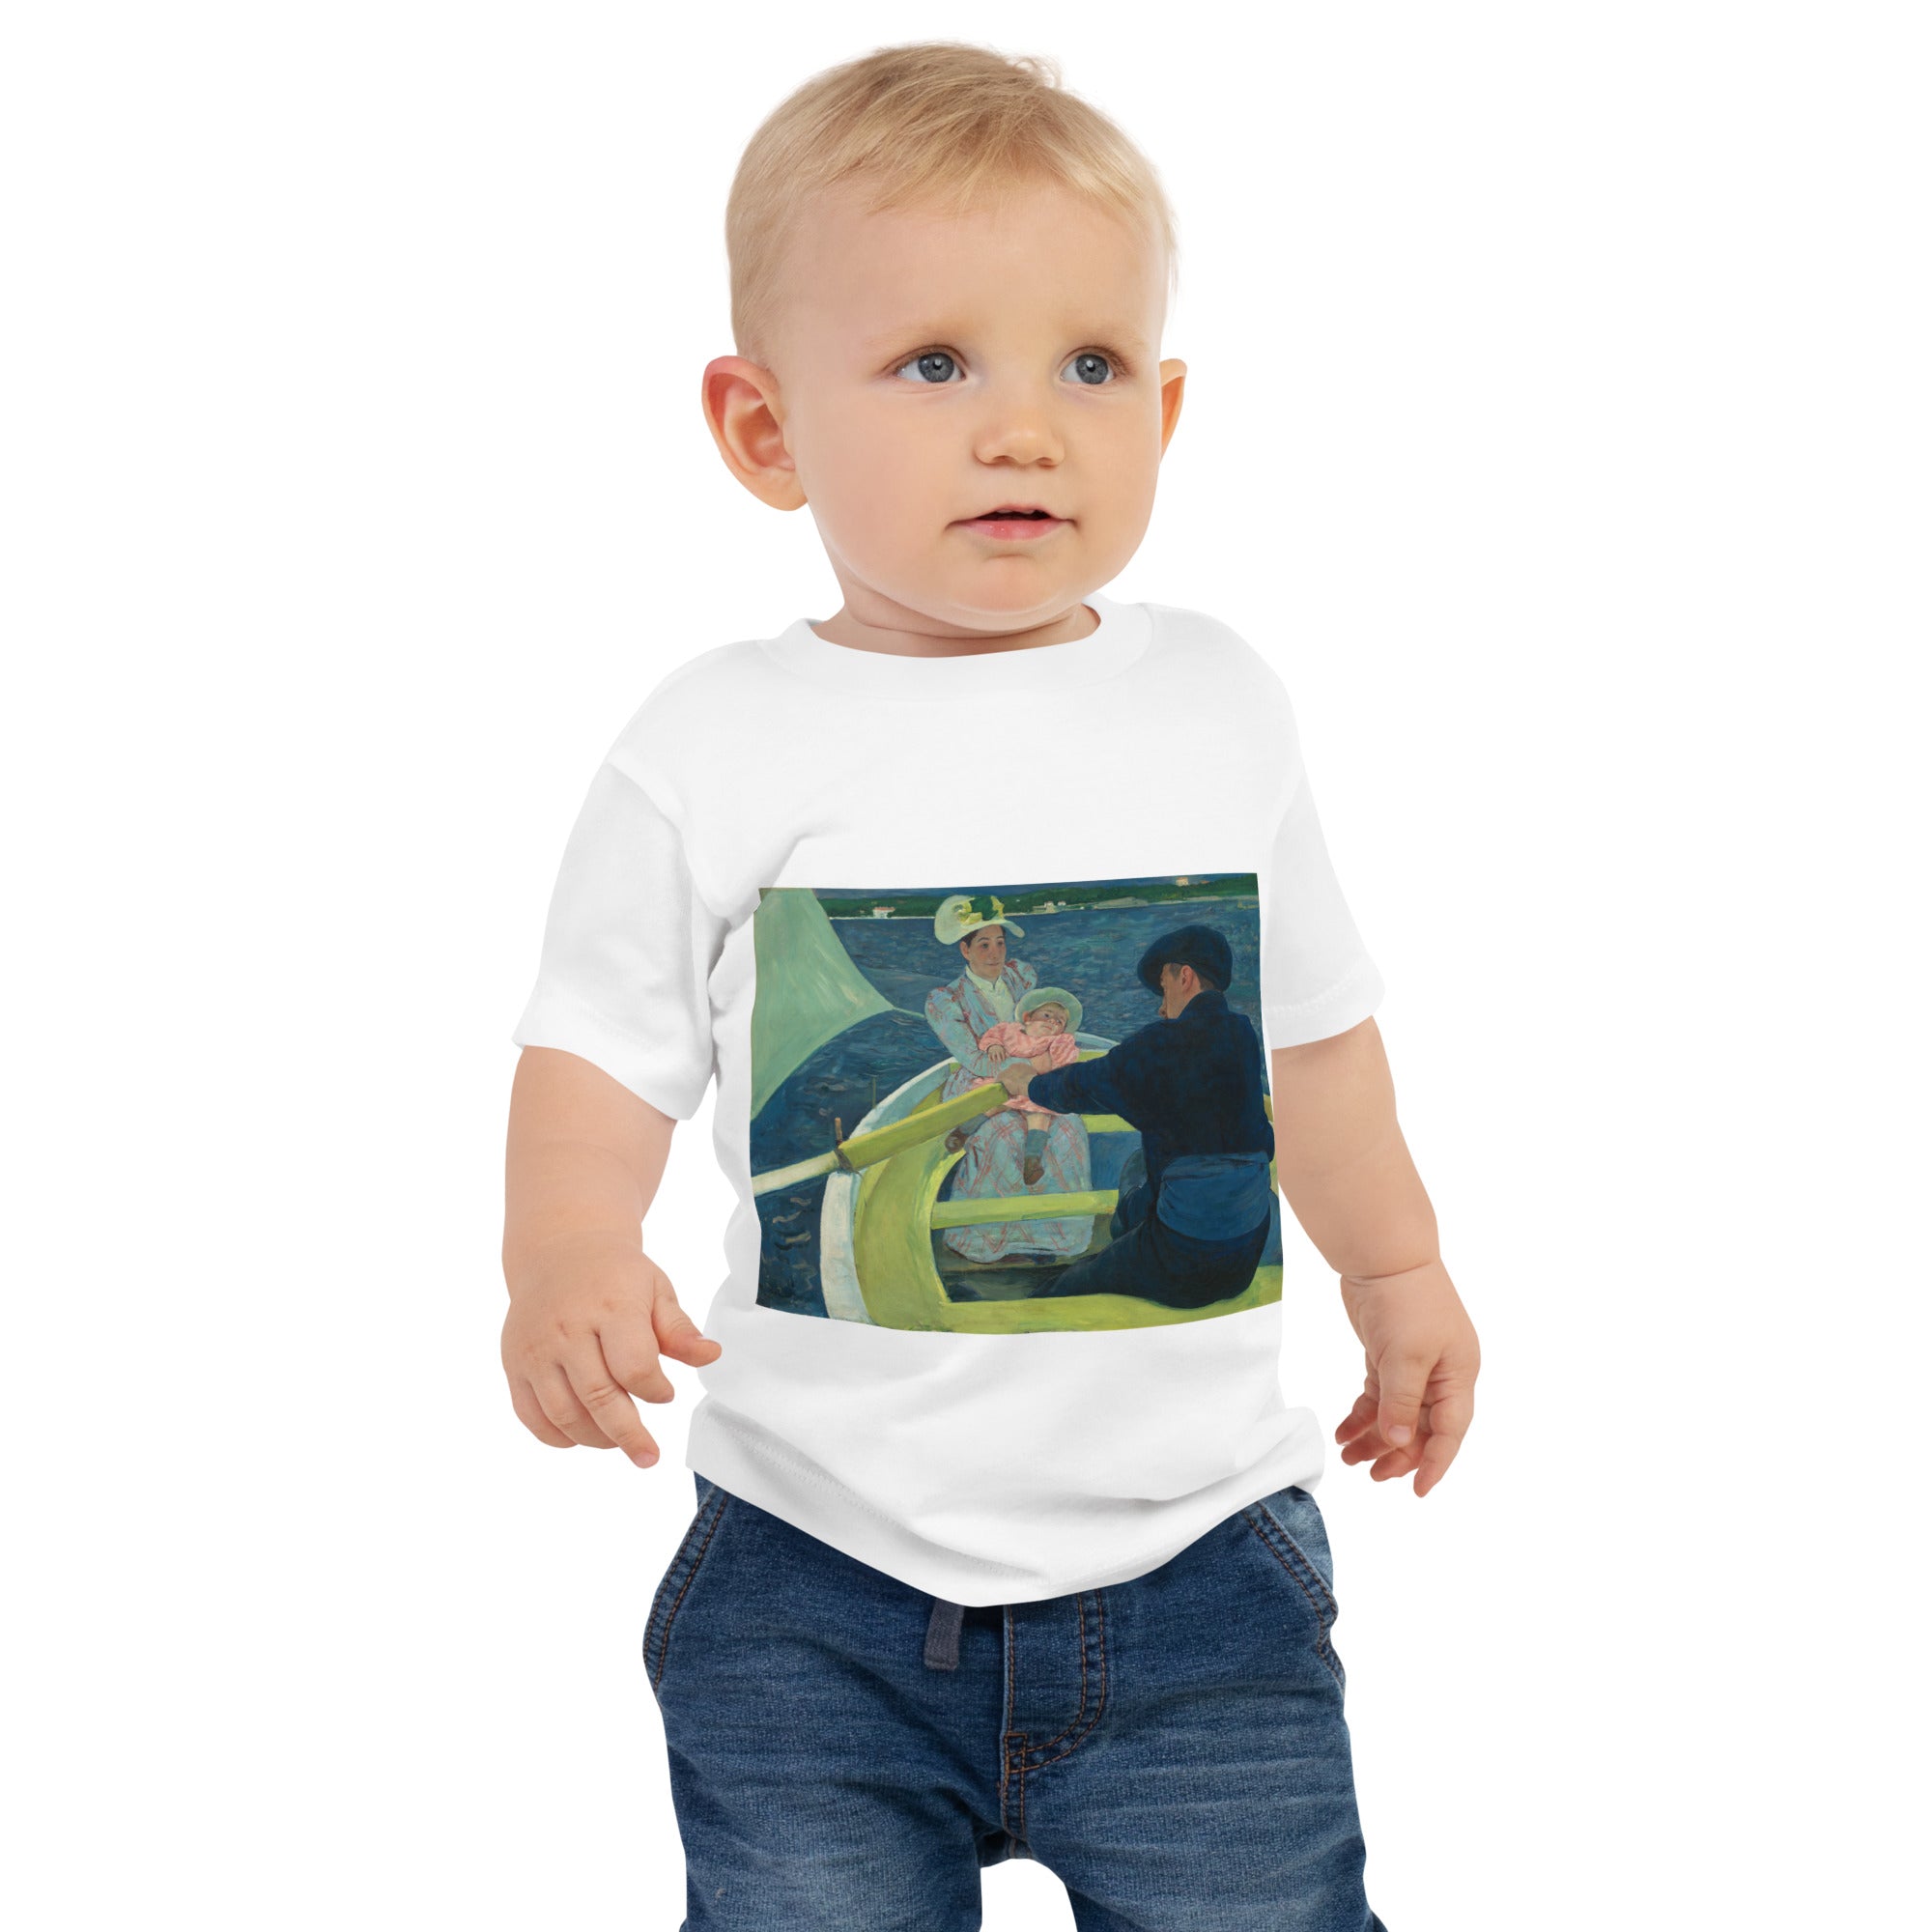 Mary Cassatt 'The Boating Party' Berühmtes Gemälde Baby Basic T-Shirt | Premium Baby Art T-Shirt